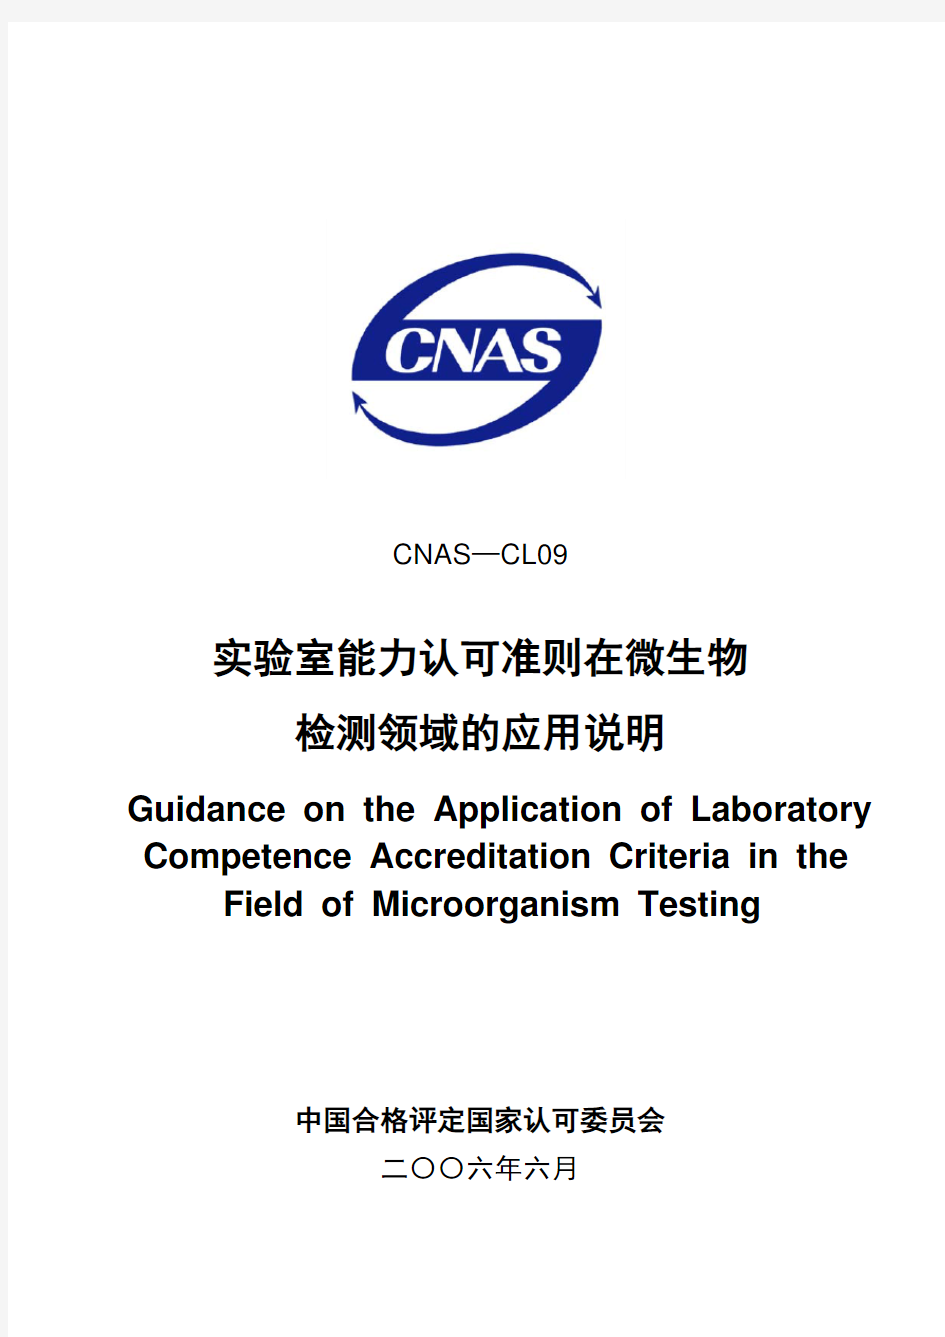 CNAS-CL09实验室认可准则在微生物检测实验室的应用说明